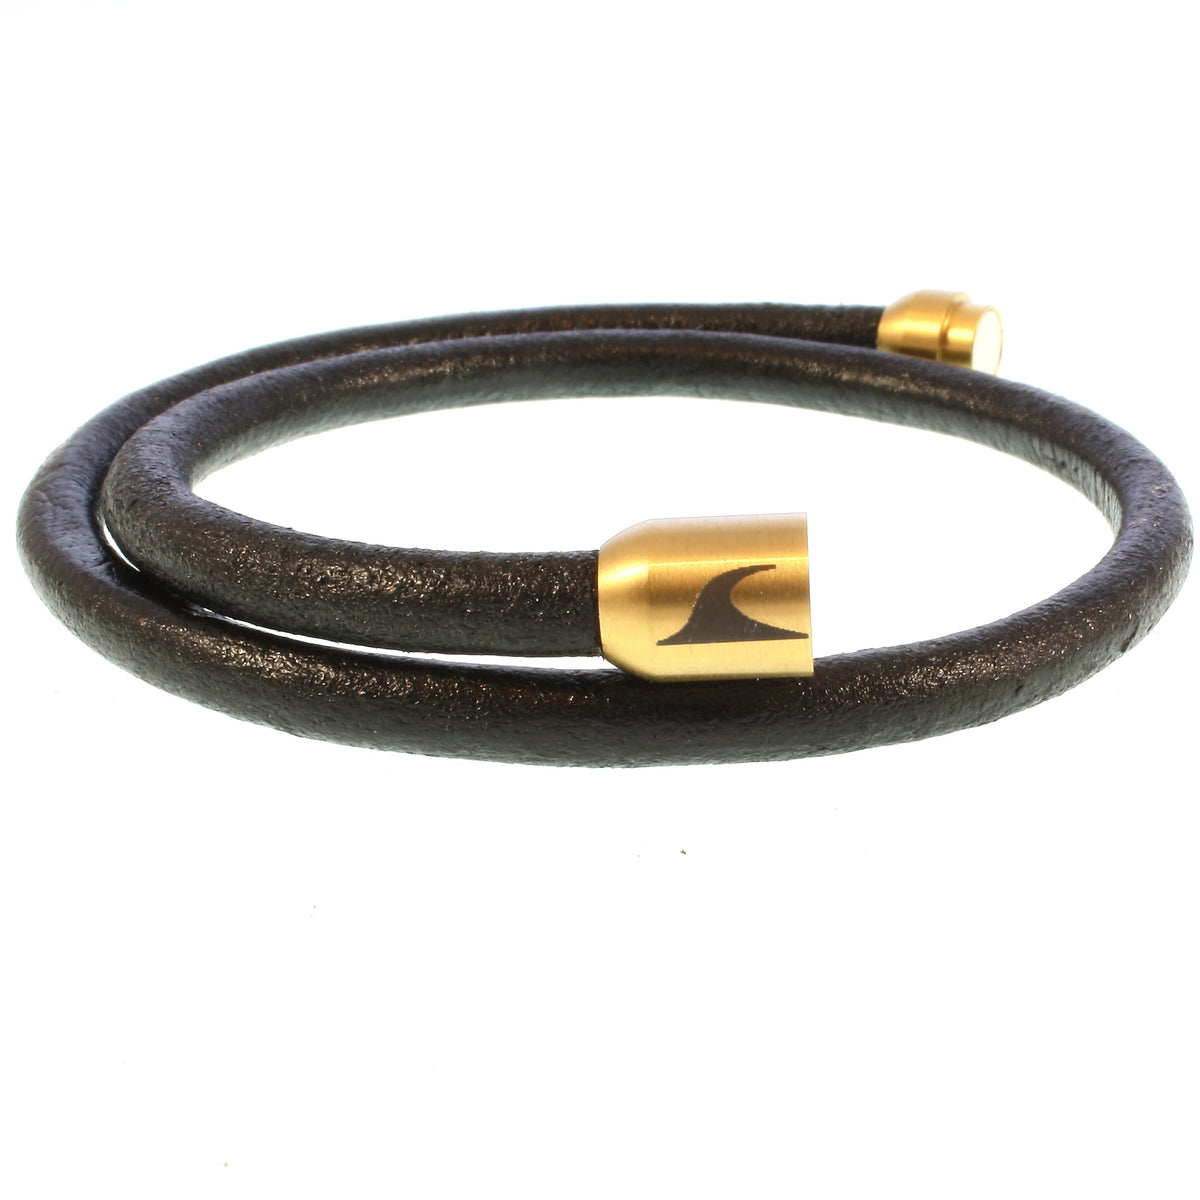 Herren-Leder-Armband-hawaii-schwarz-gold-massiv-Edelstahlverschluss-offen-wavepirate-shop-r